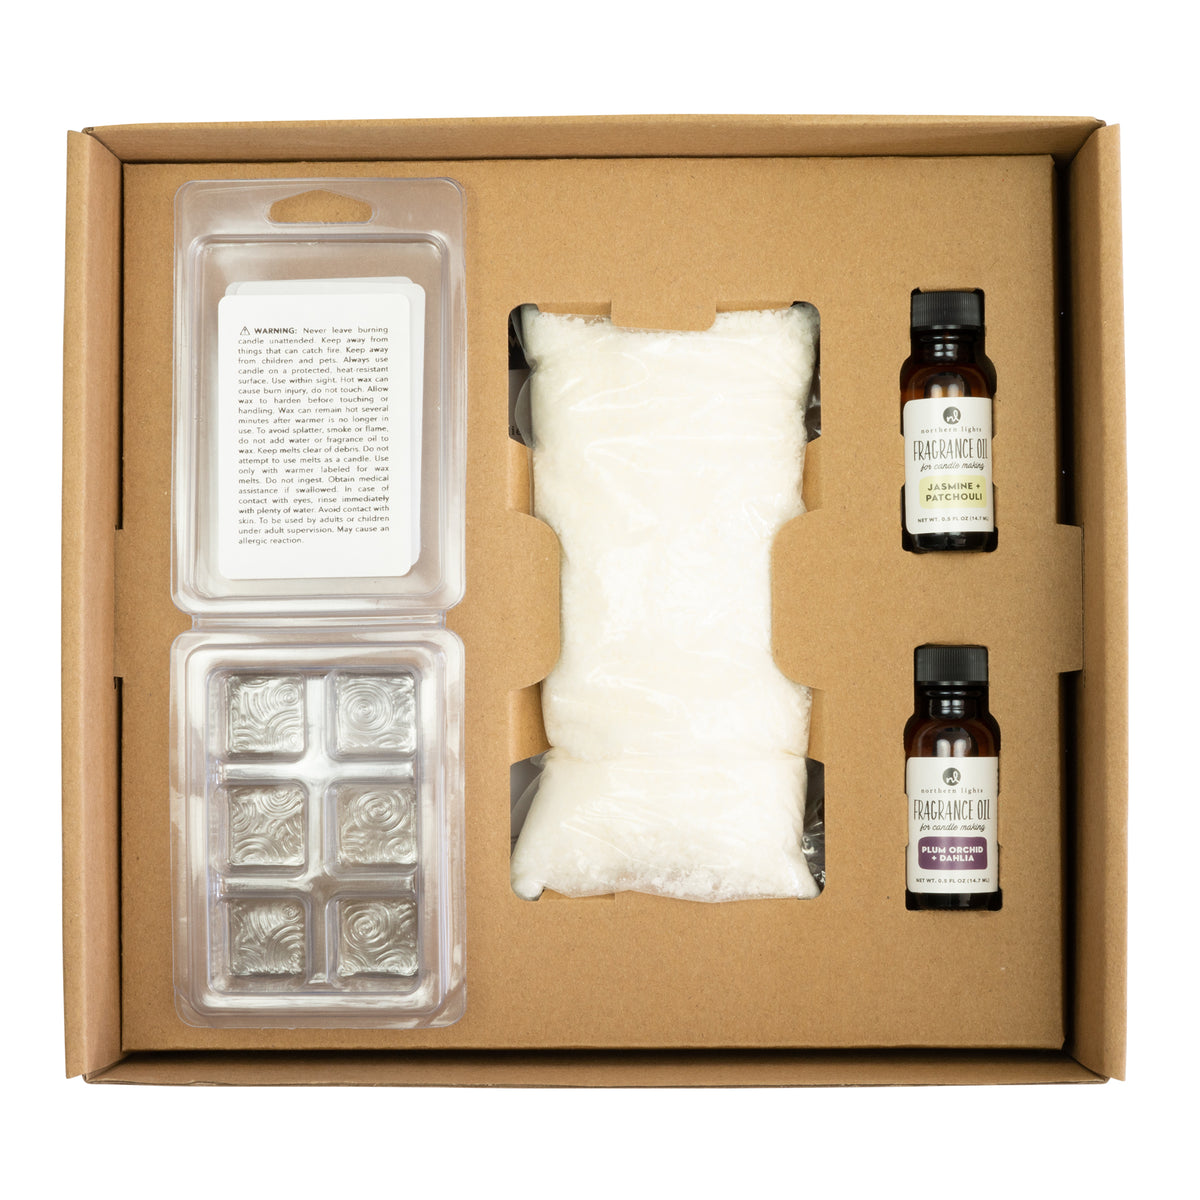 The Experimenter Wax Melt Making Kit